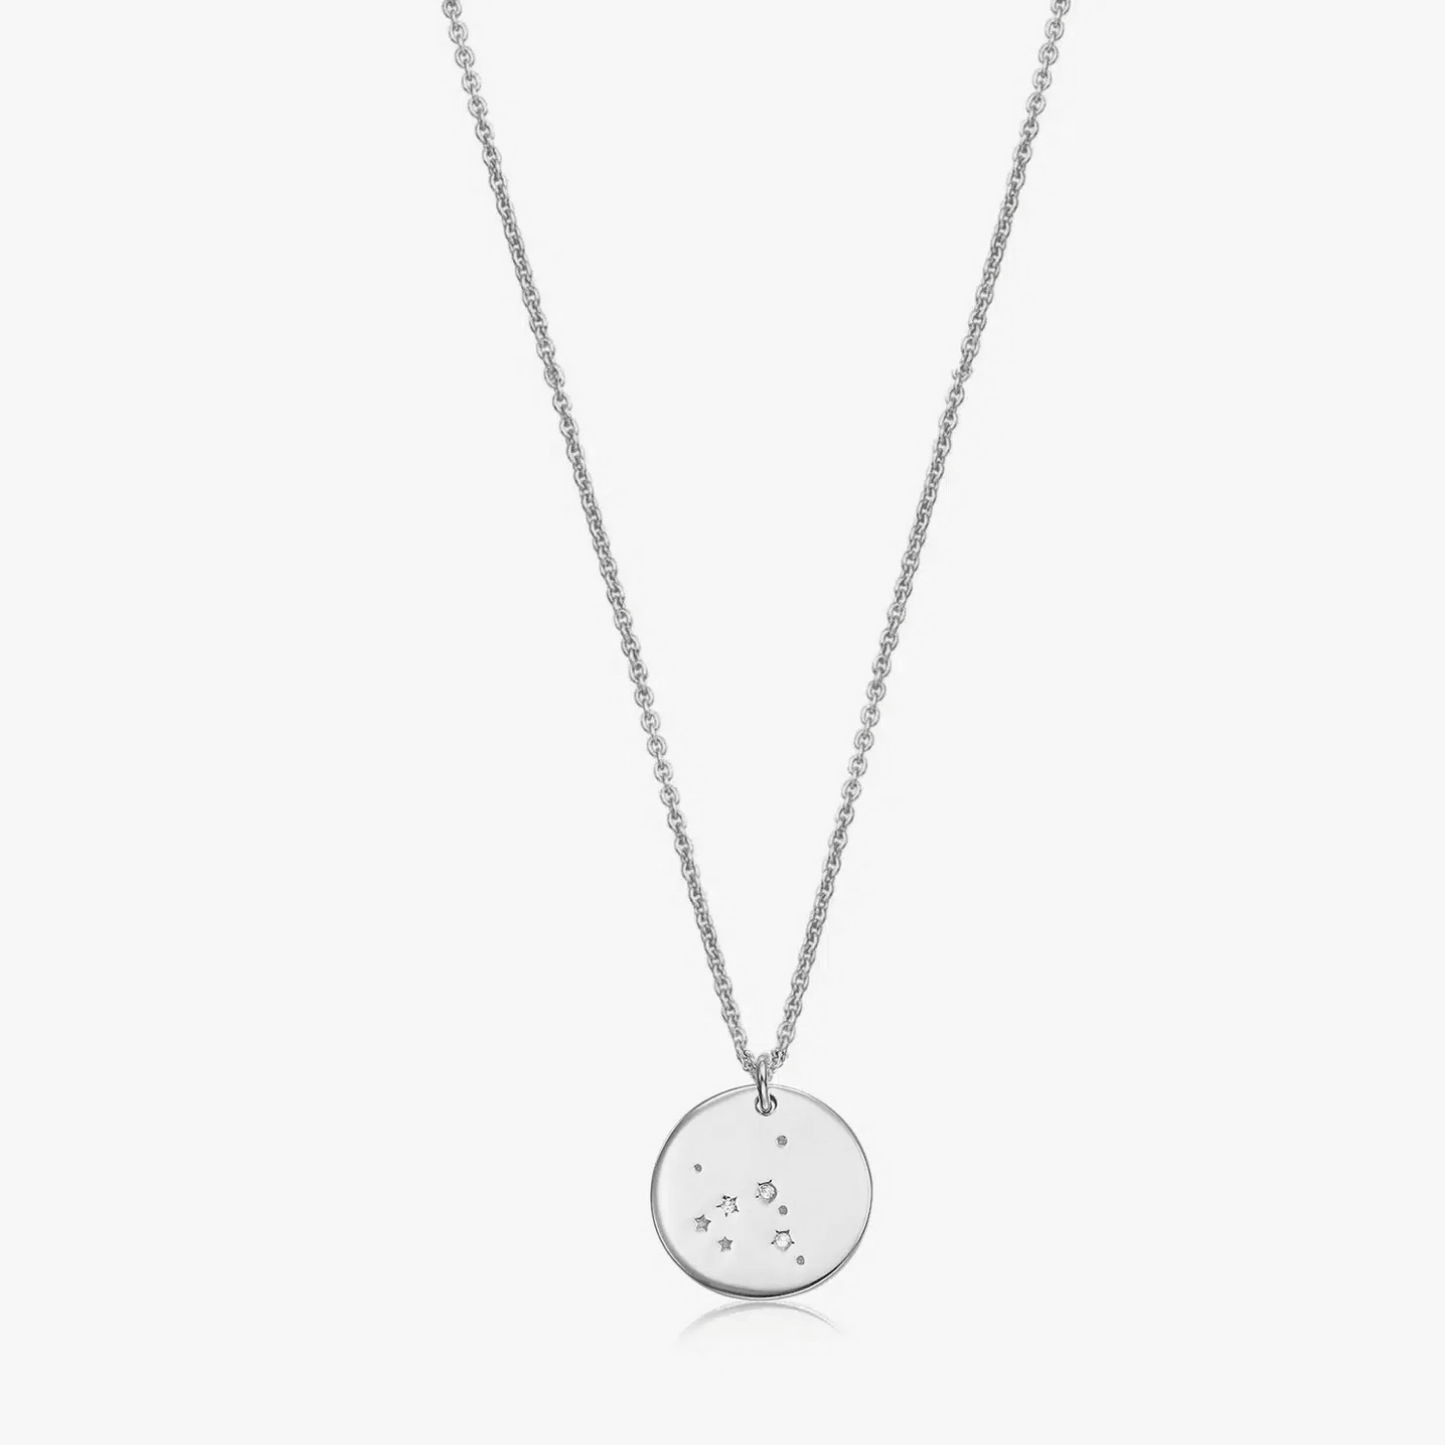 Silver Zodiac - Sagittarius necklace